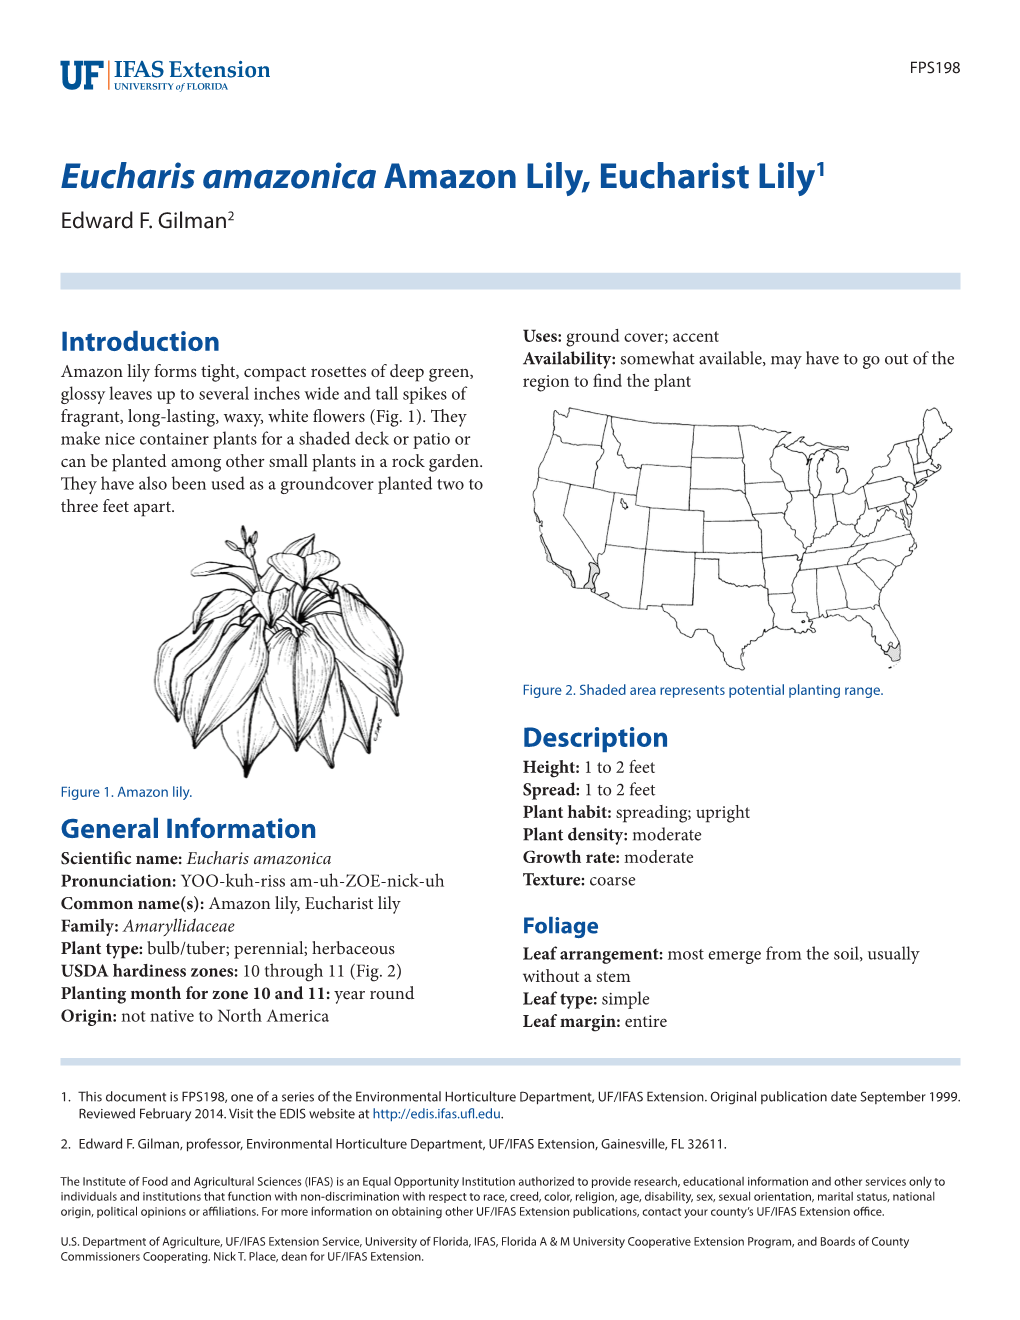 Eucharis Amazonica Amazon Lily, Eucharist Lily1 Edward F